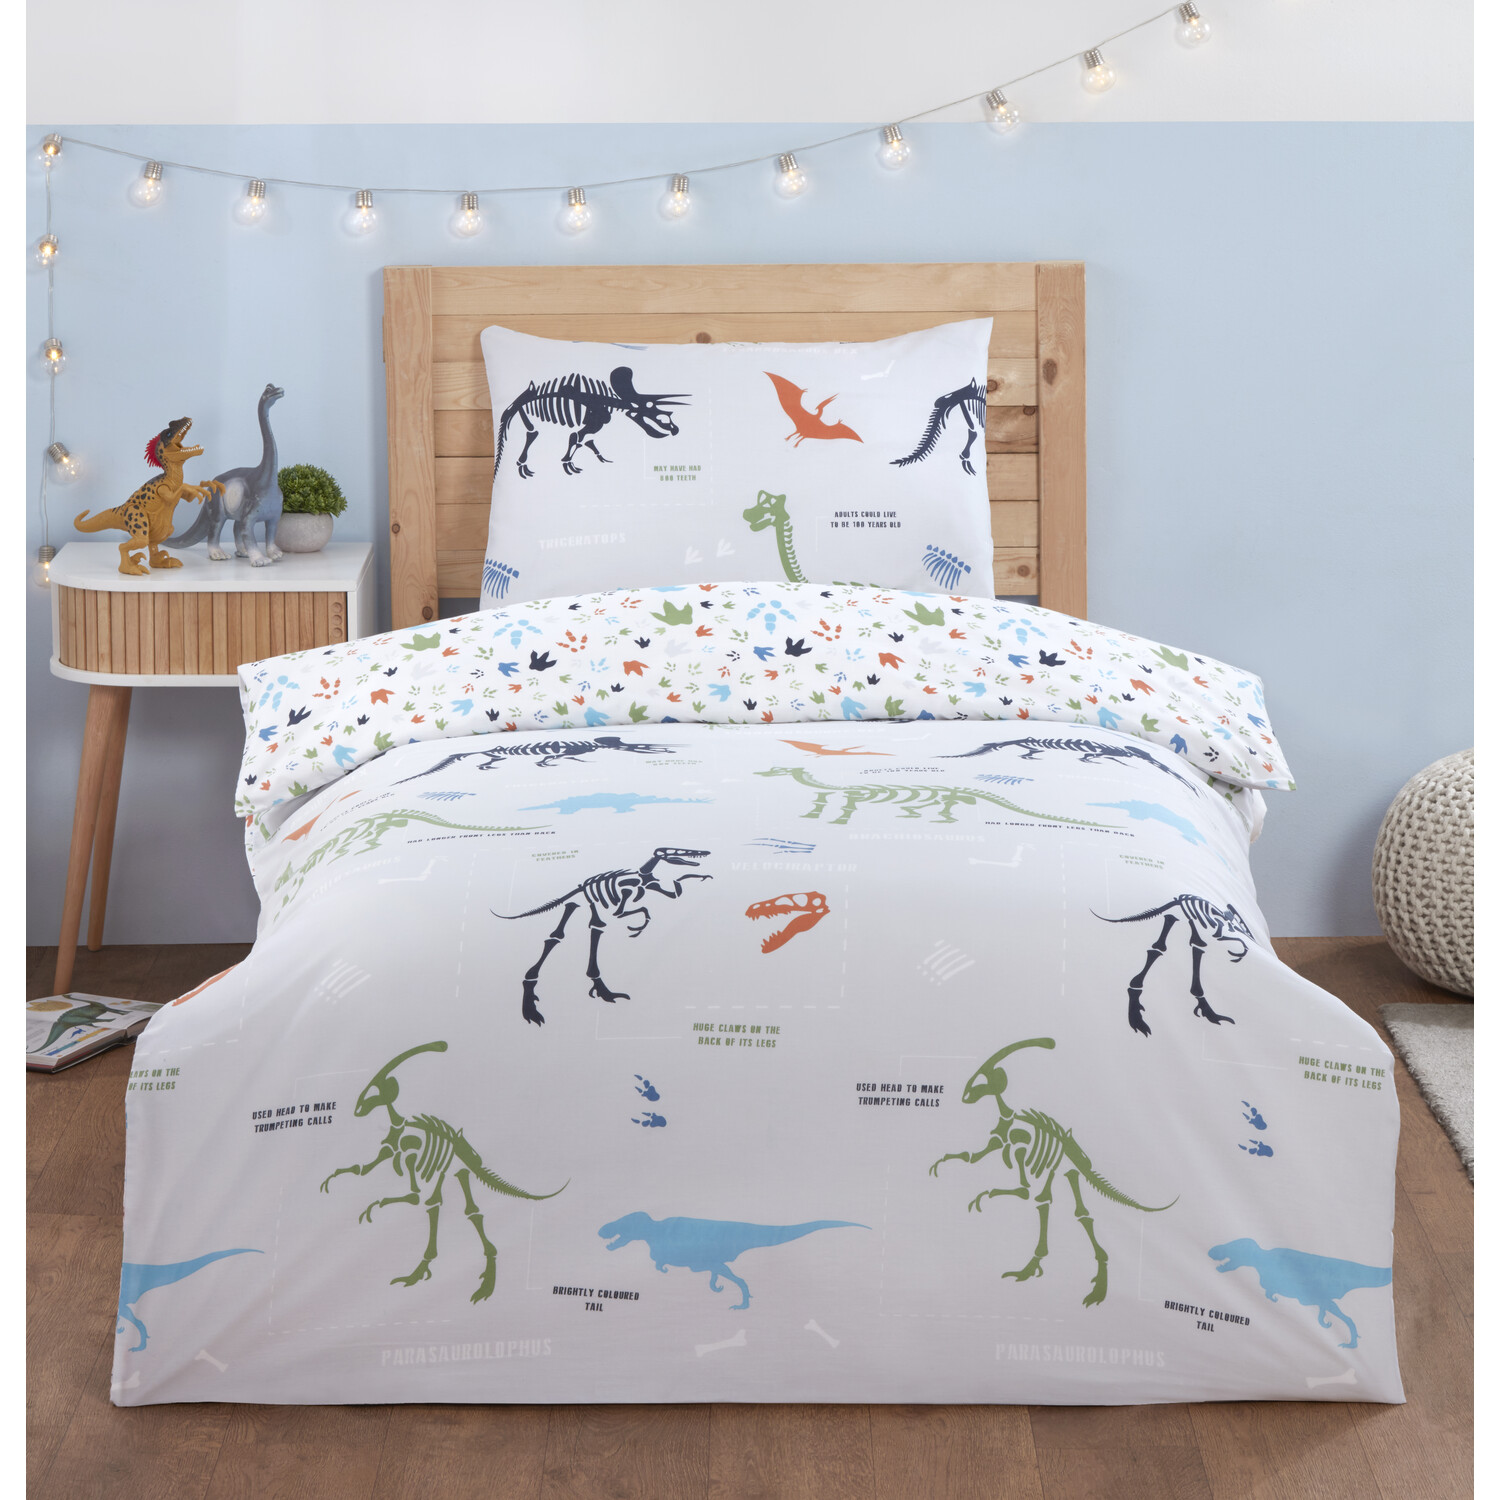 Dinosaur Duvet Cover and Pillowcase Set - Grey Image 1